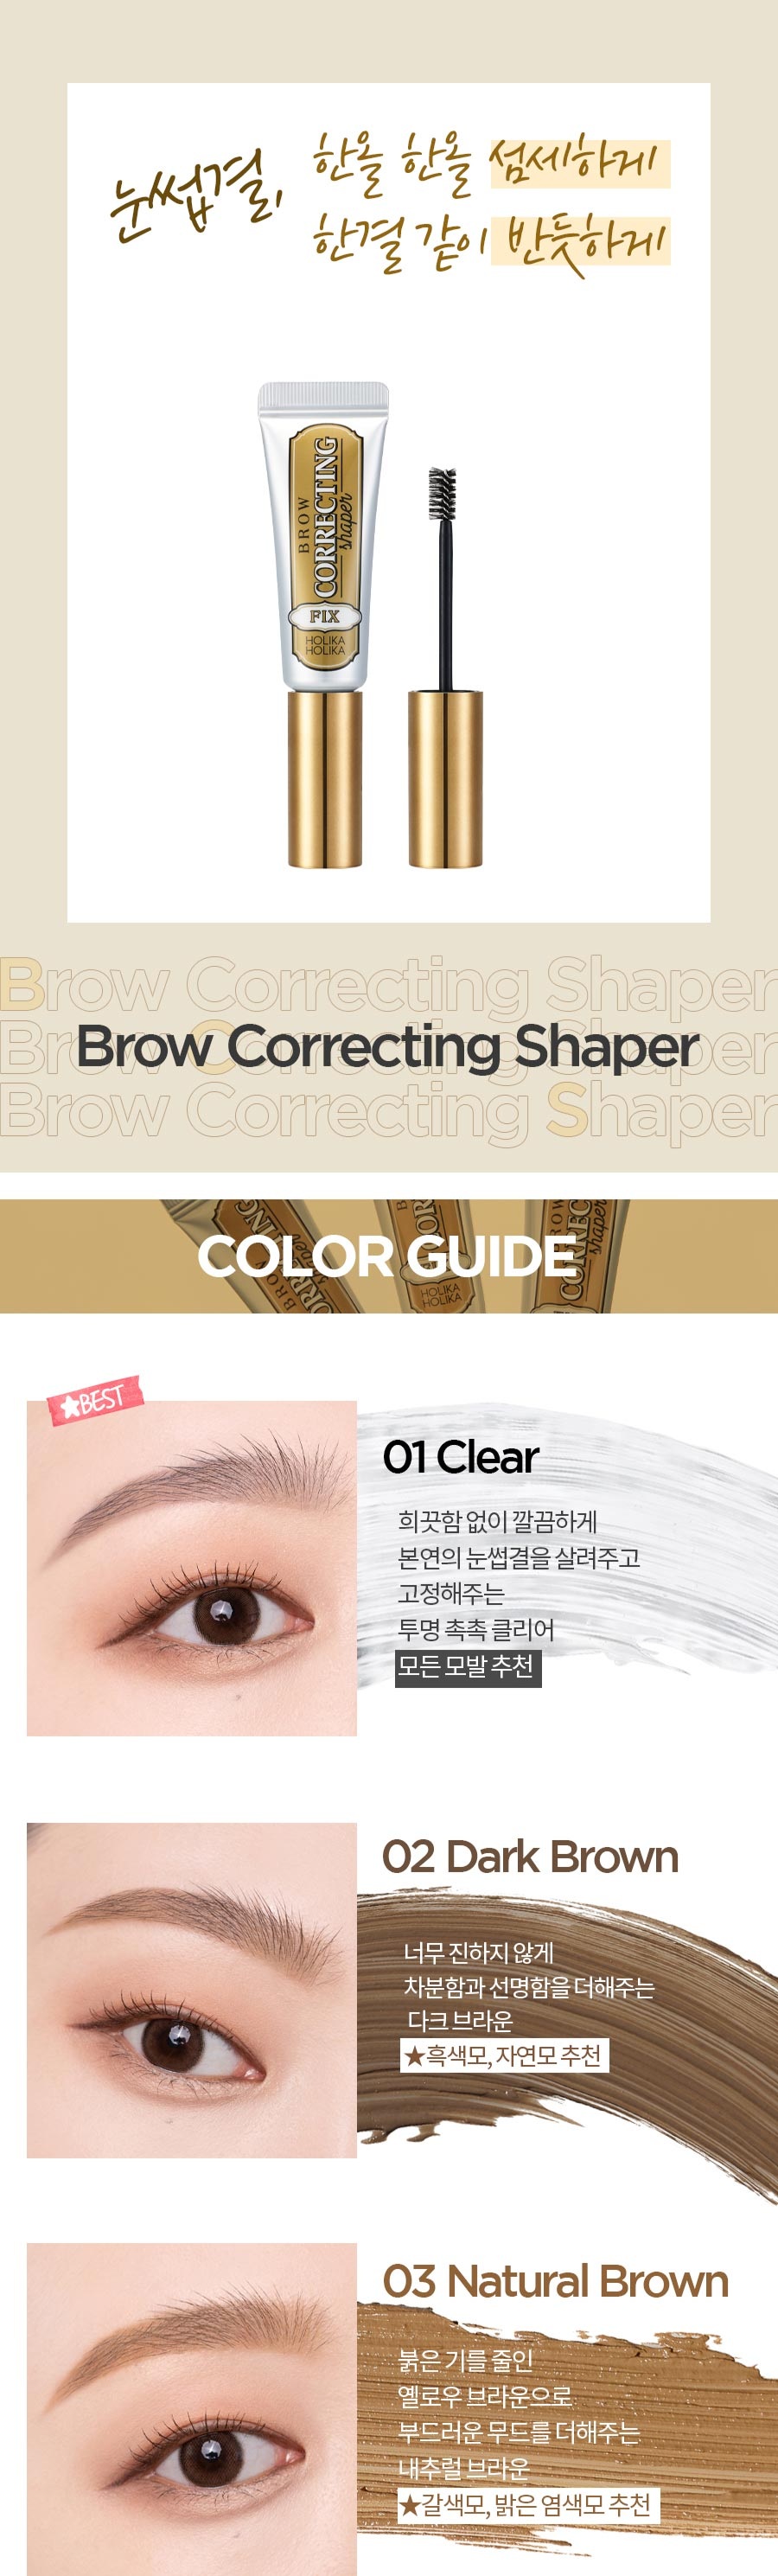 Holika Holika Brow Correcting Shaper korean makeup product online shop malaysia india indonesia1